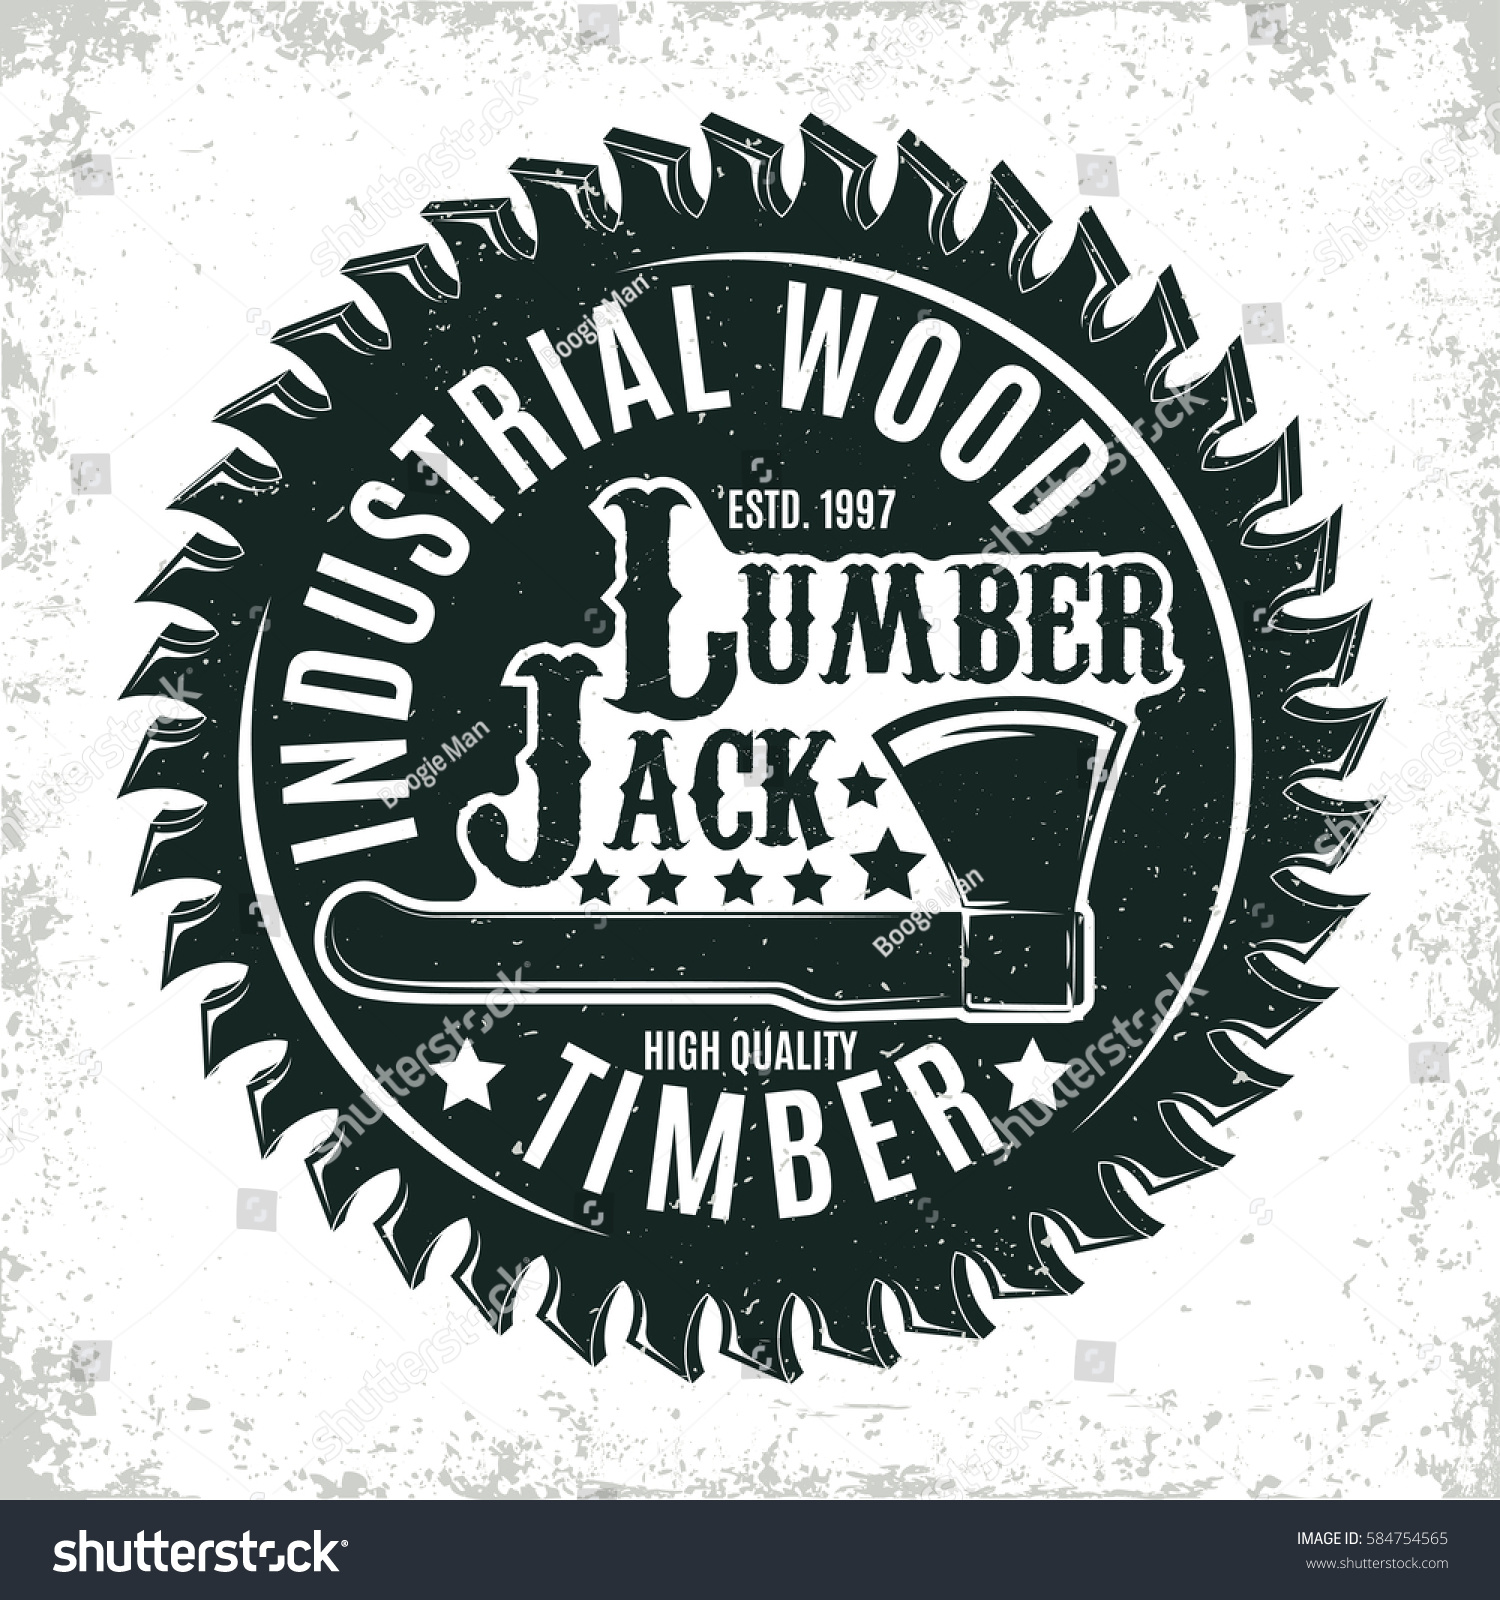 Vintage Woodworking Logo Design Grange Print Stock Vector 